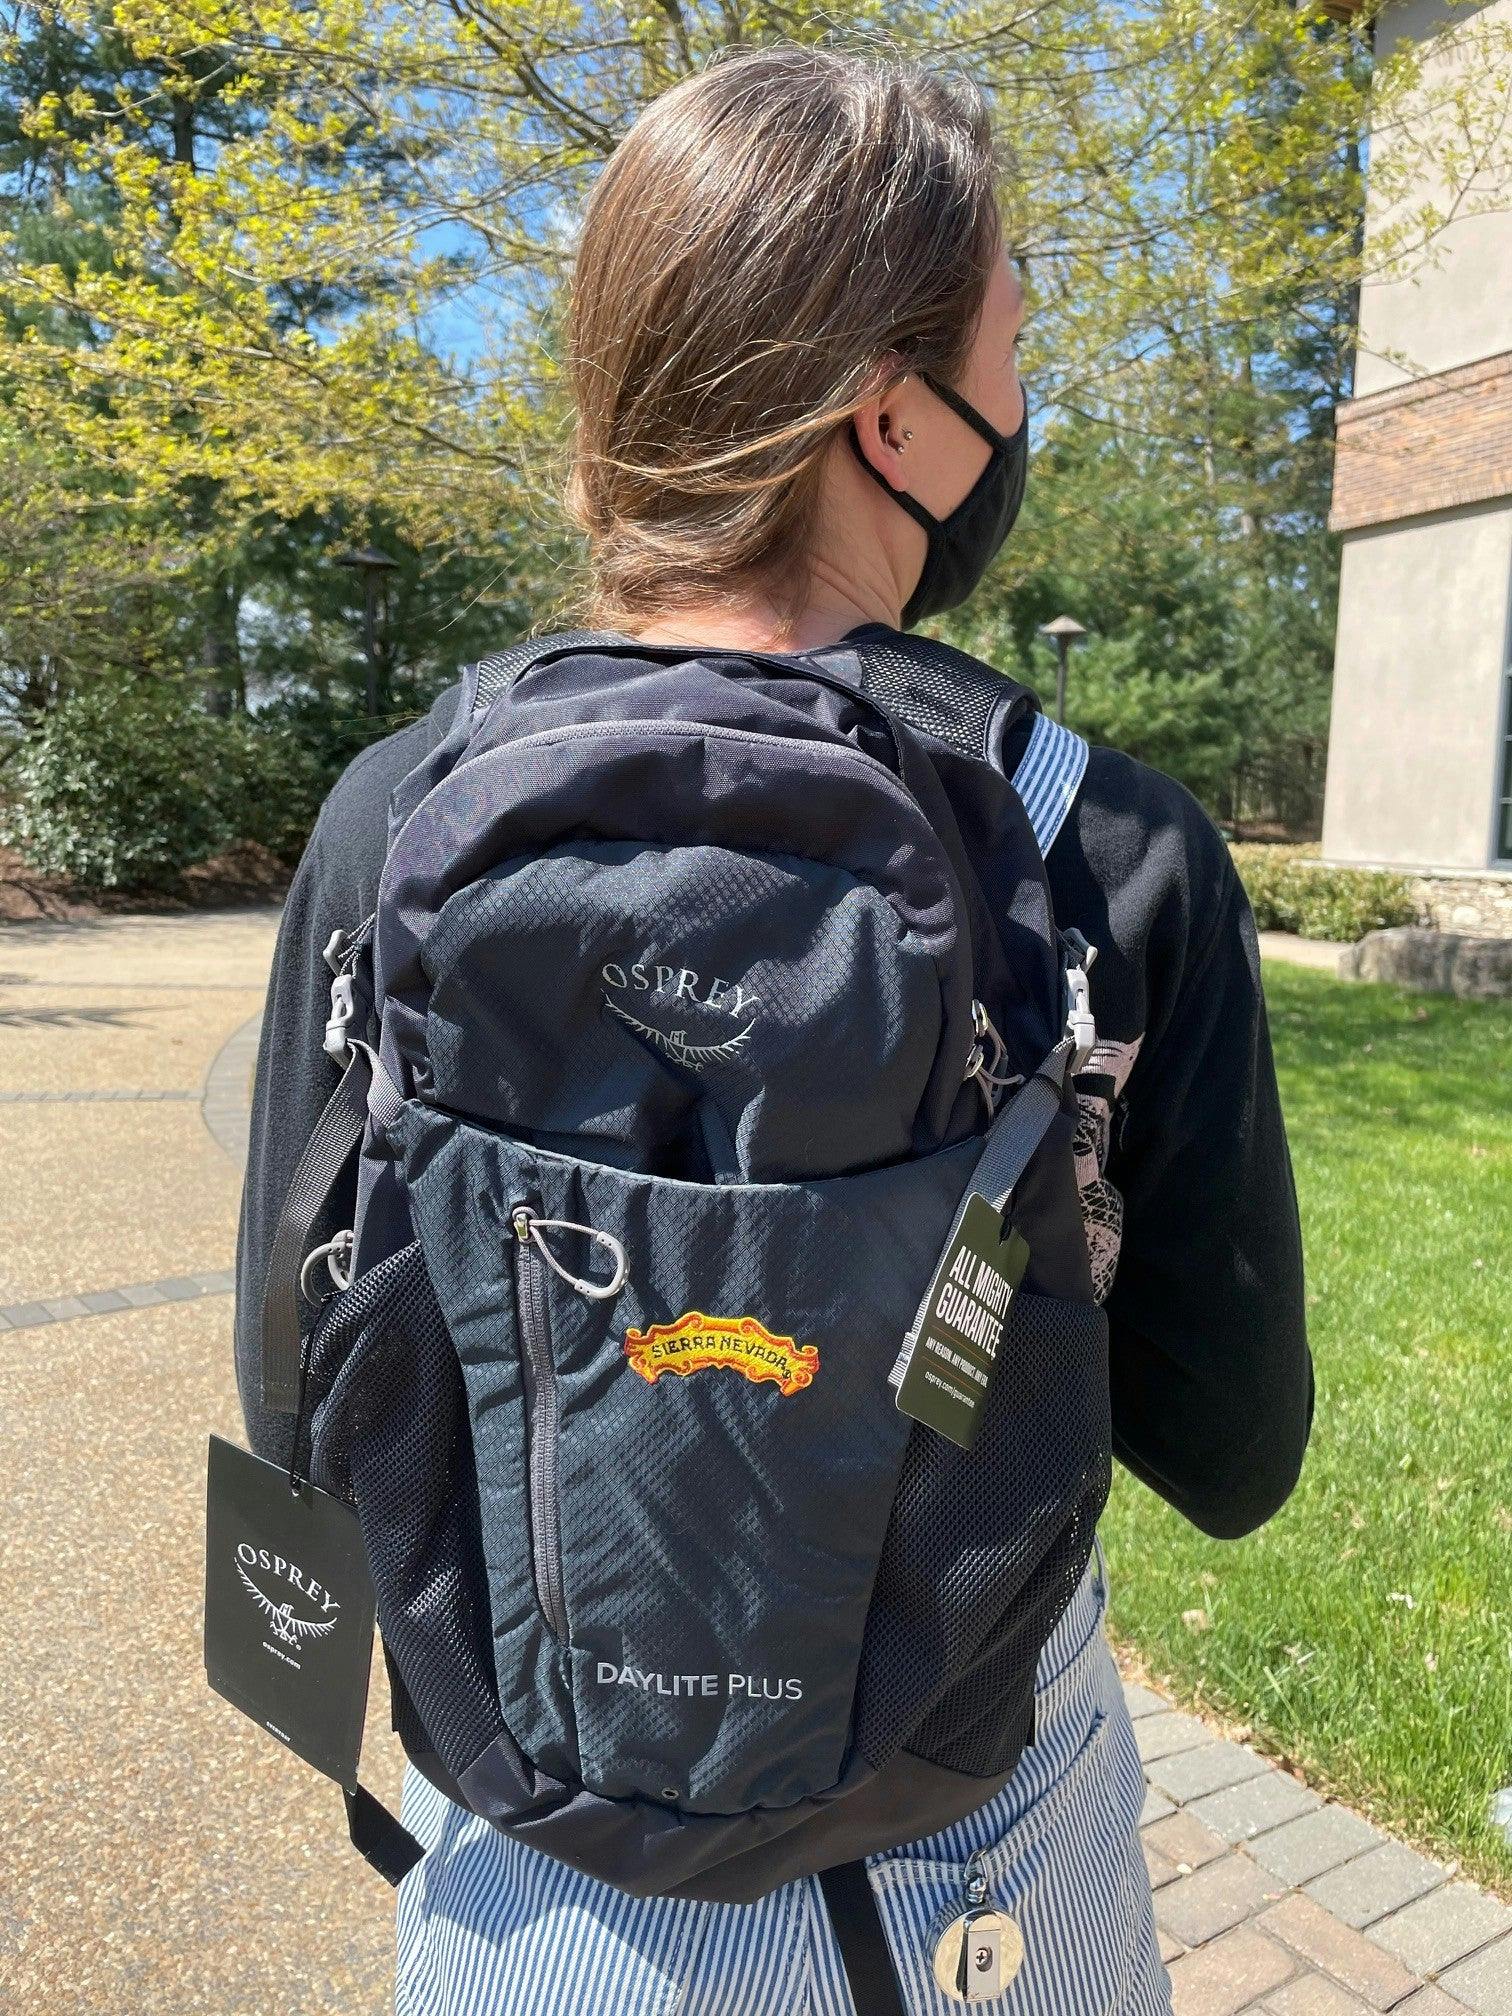 Osprey Daylite Backpack